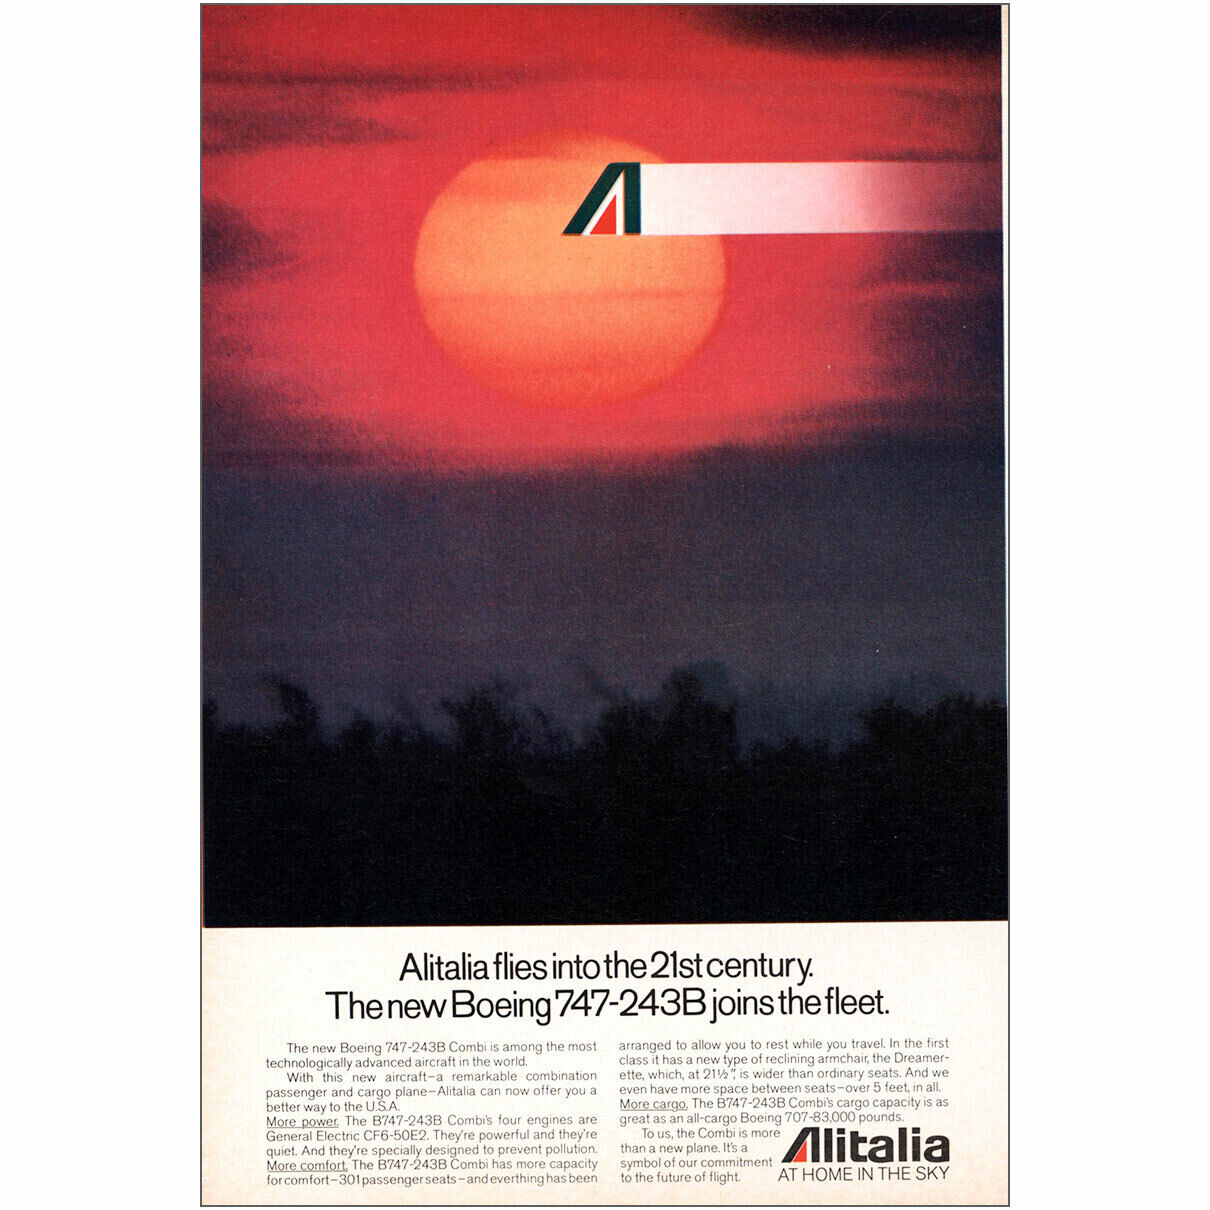 1980 Alitalia Airlines: Boeing 747 243B Joins the Fleet Vintage Print Ad